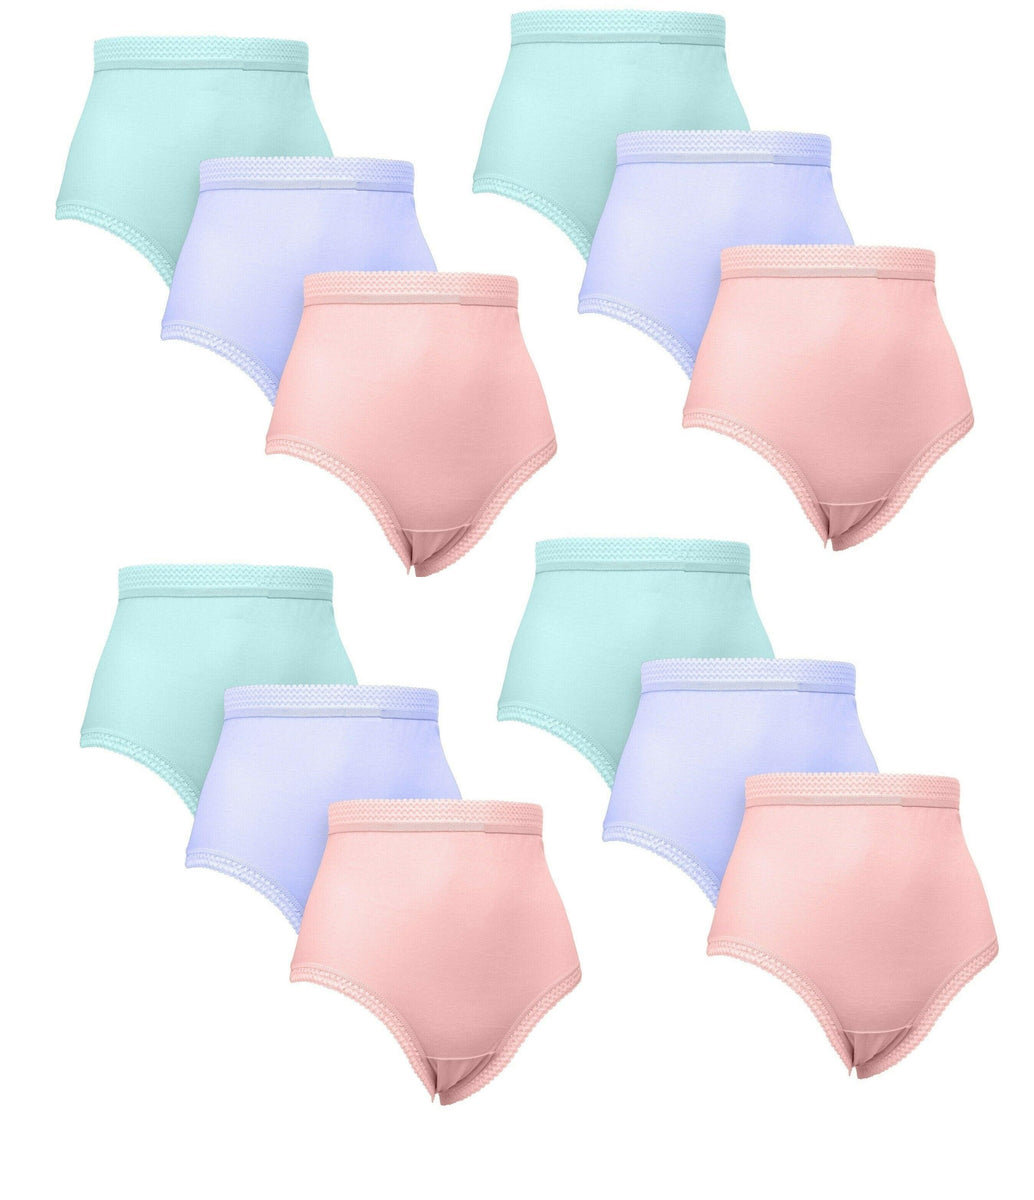 Ladies Assorted Colors Underwear Knickers Briefs Underpants 100